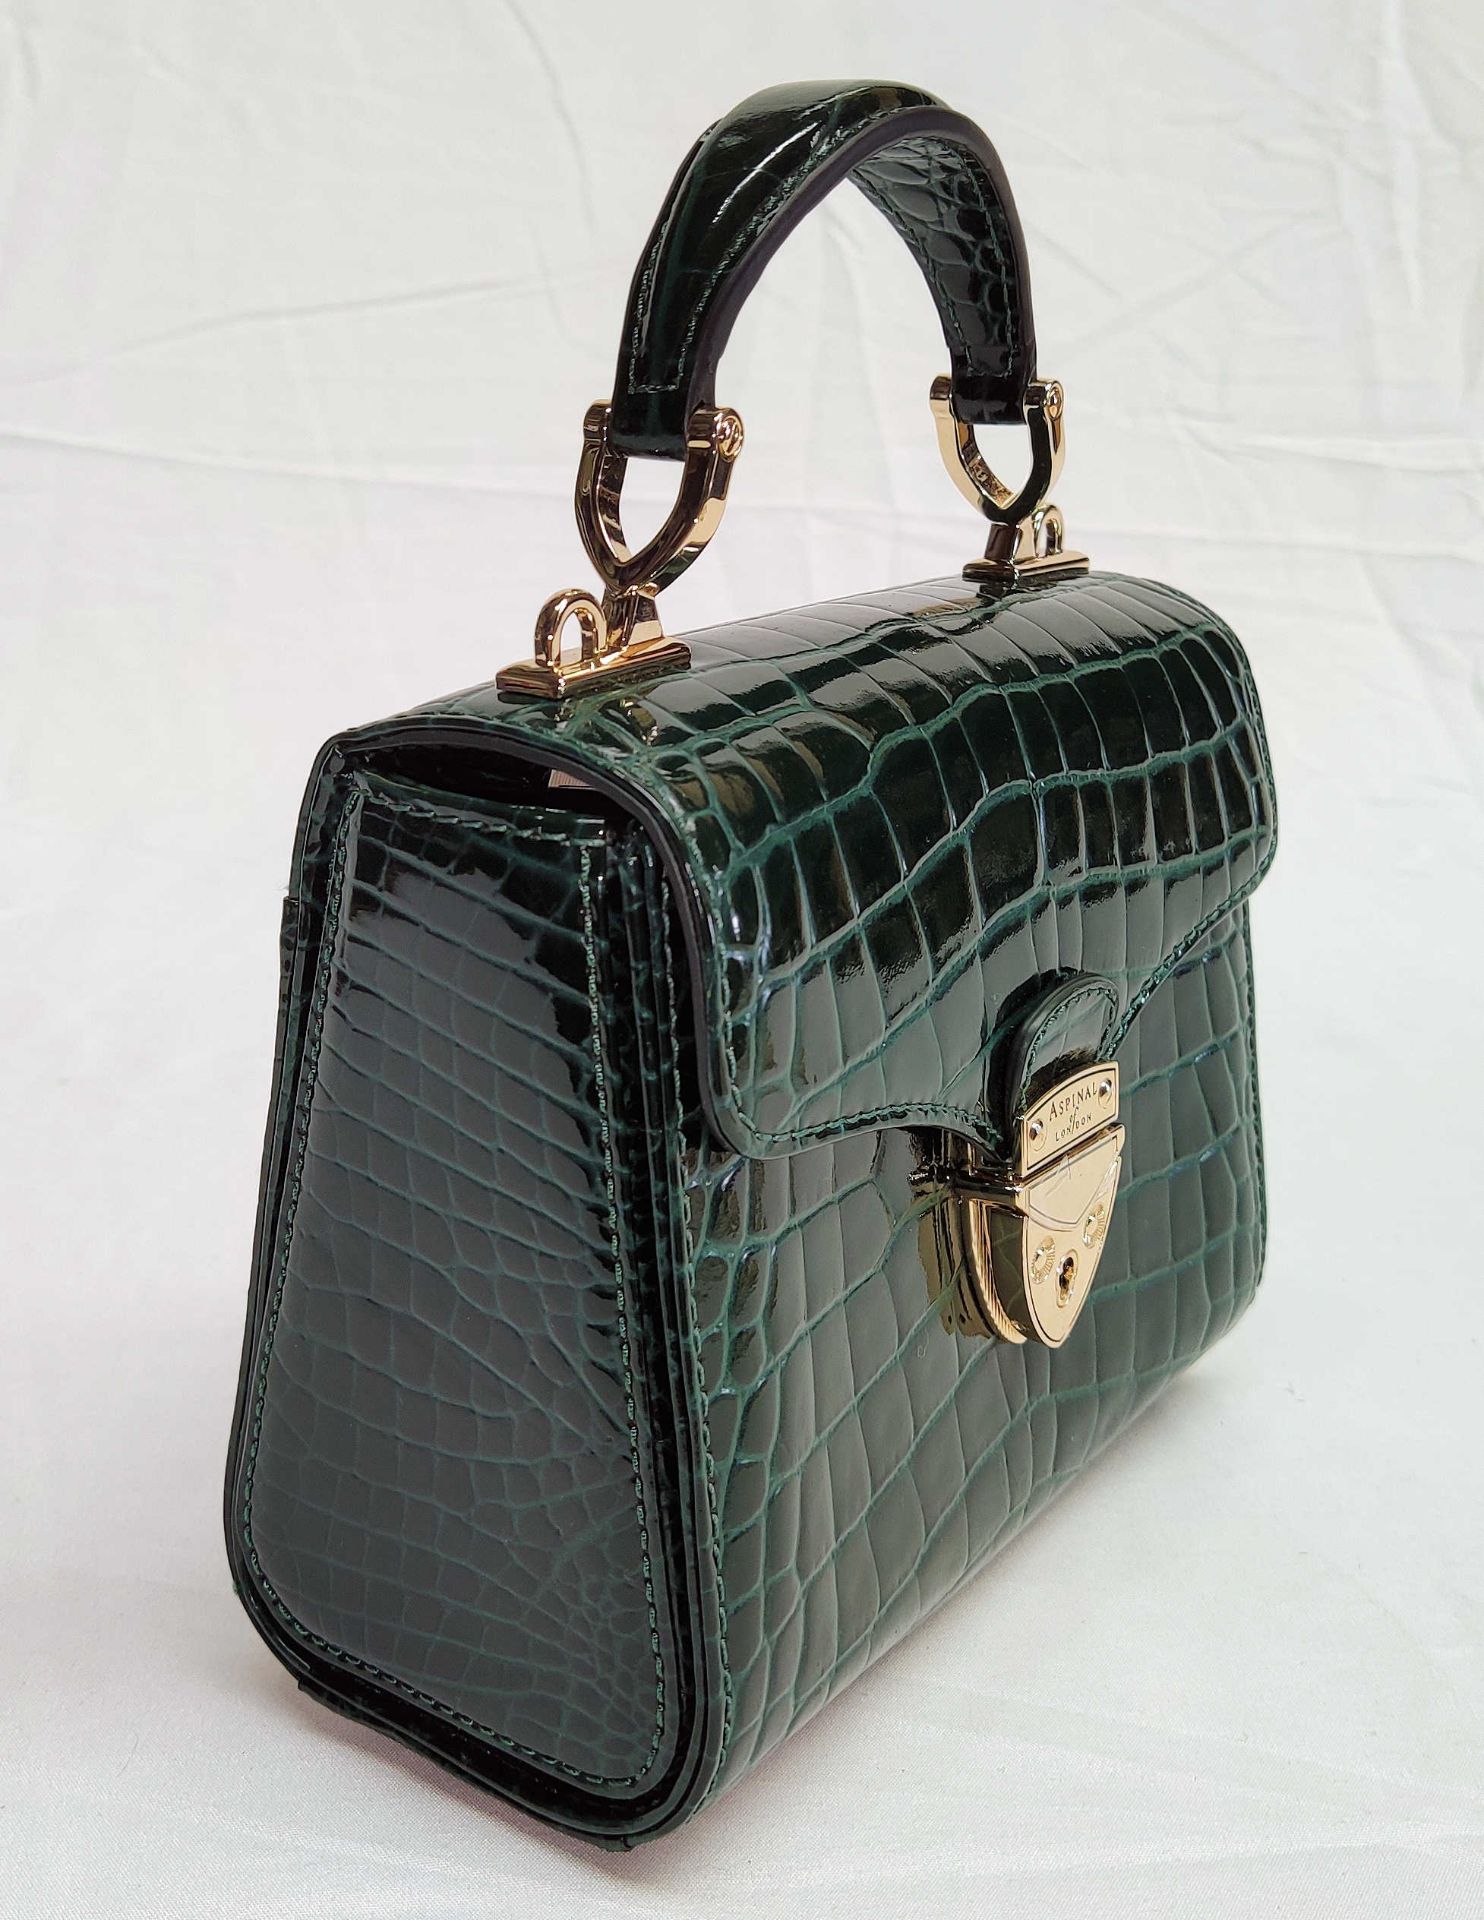 1 x ASPINAL OF LONDON Mayfair Mini Bag - Evergreen Patent Croc - Boxed - Original RRP £495 - Ref: - Image 3 of 21